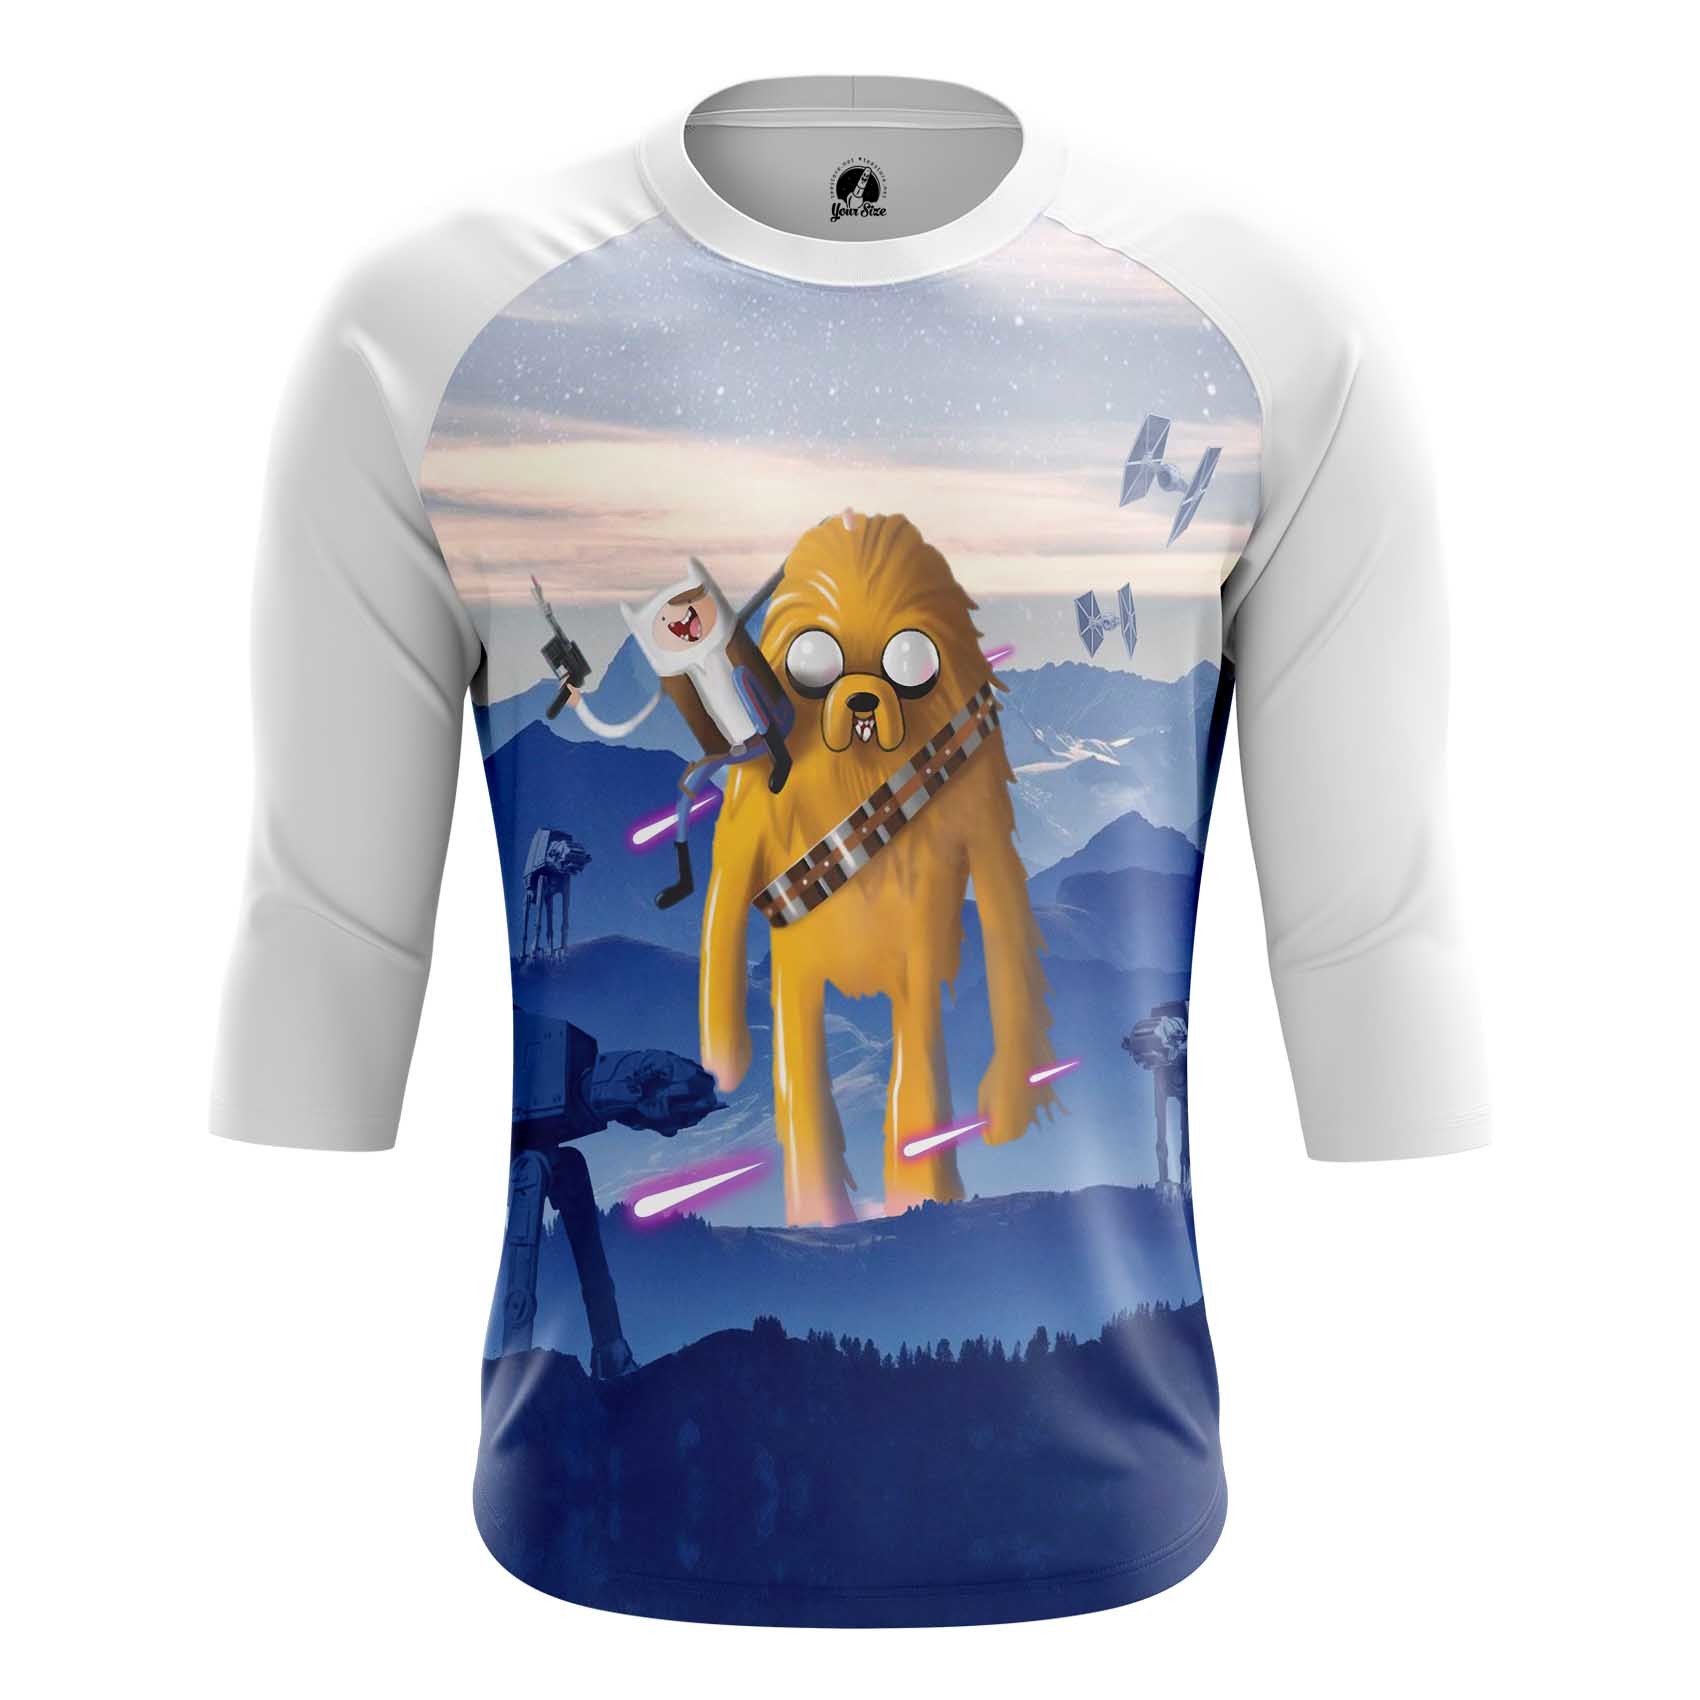 Collectibles Men'S T-Shirt Star War Adventure Adventure Time